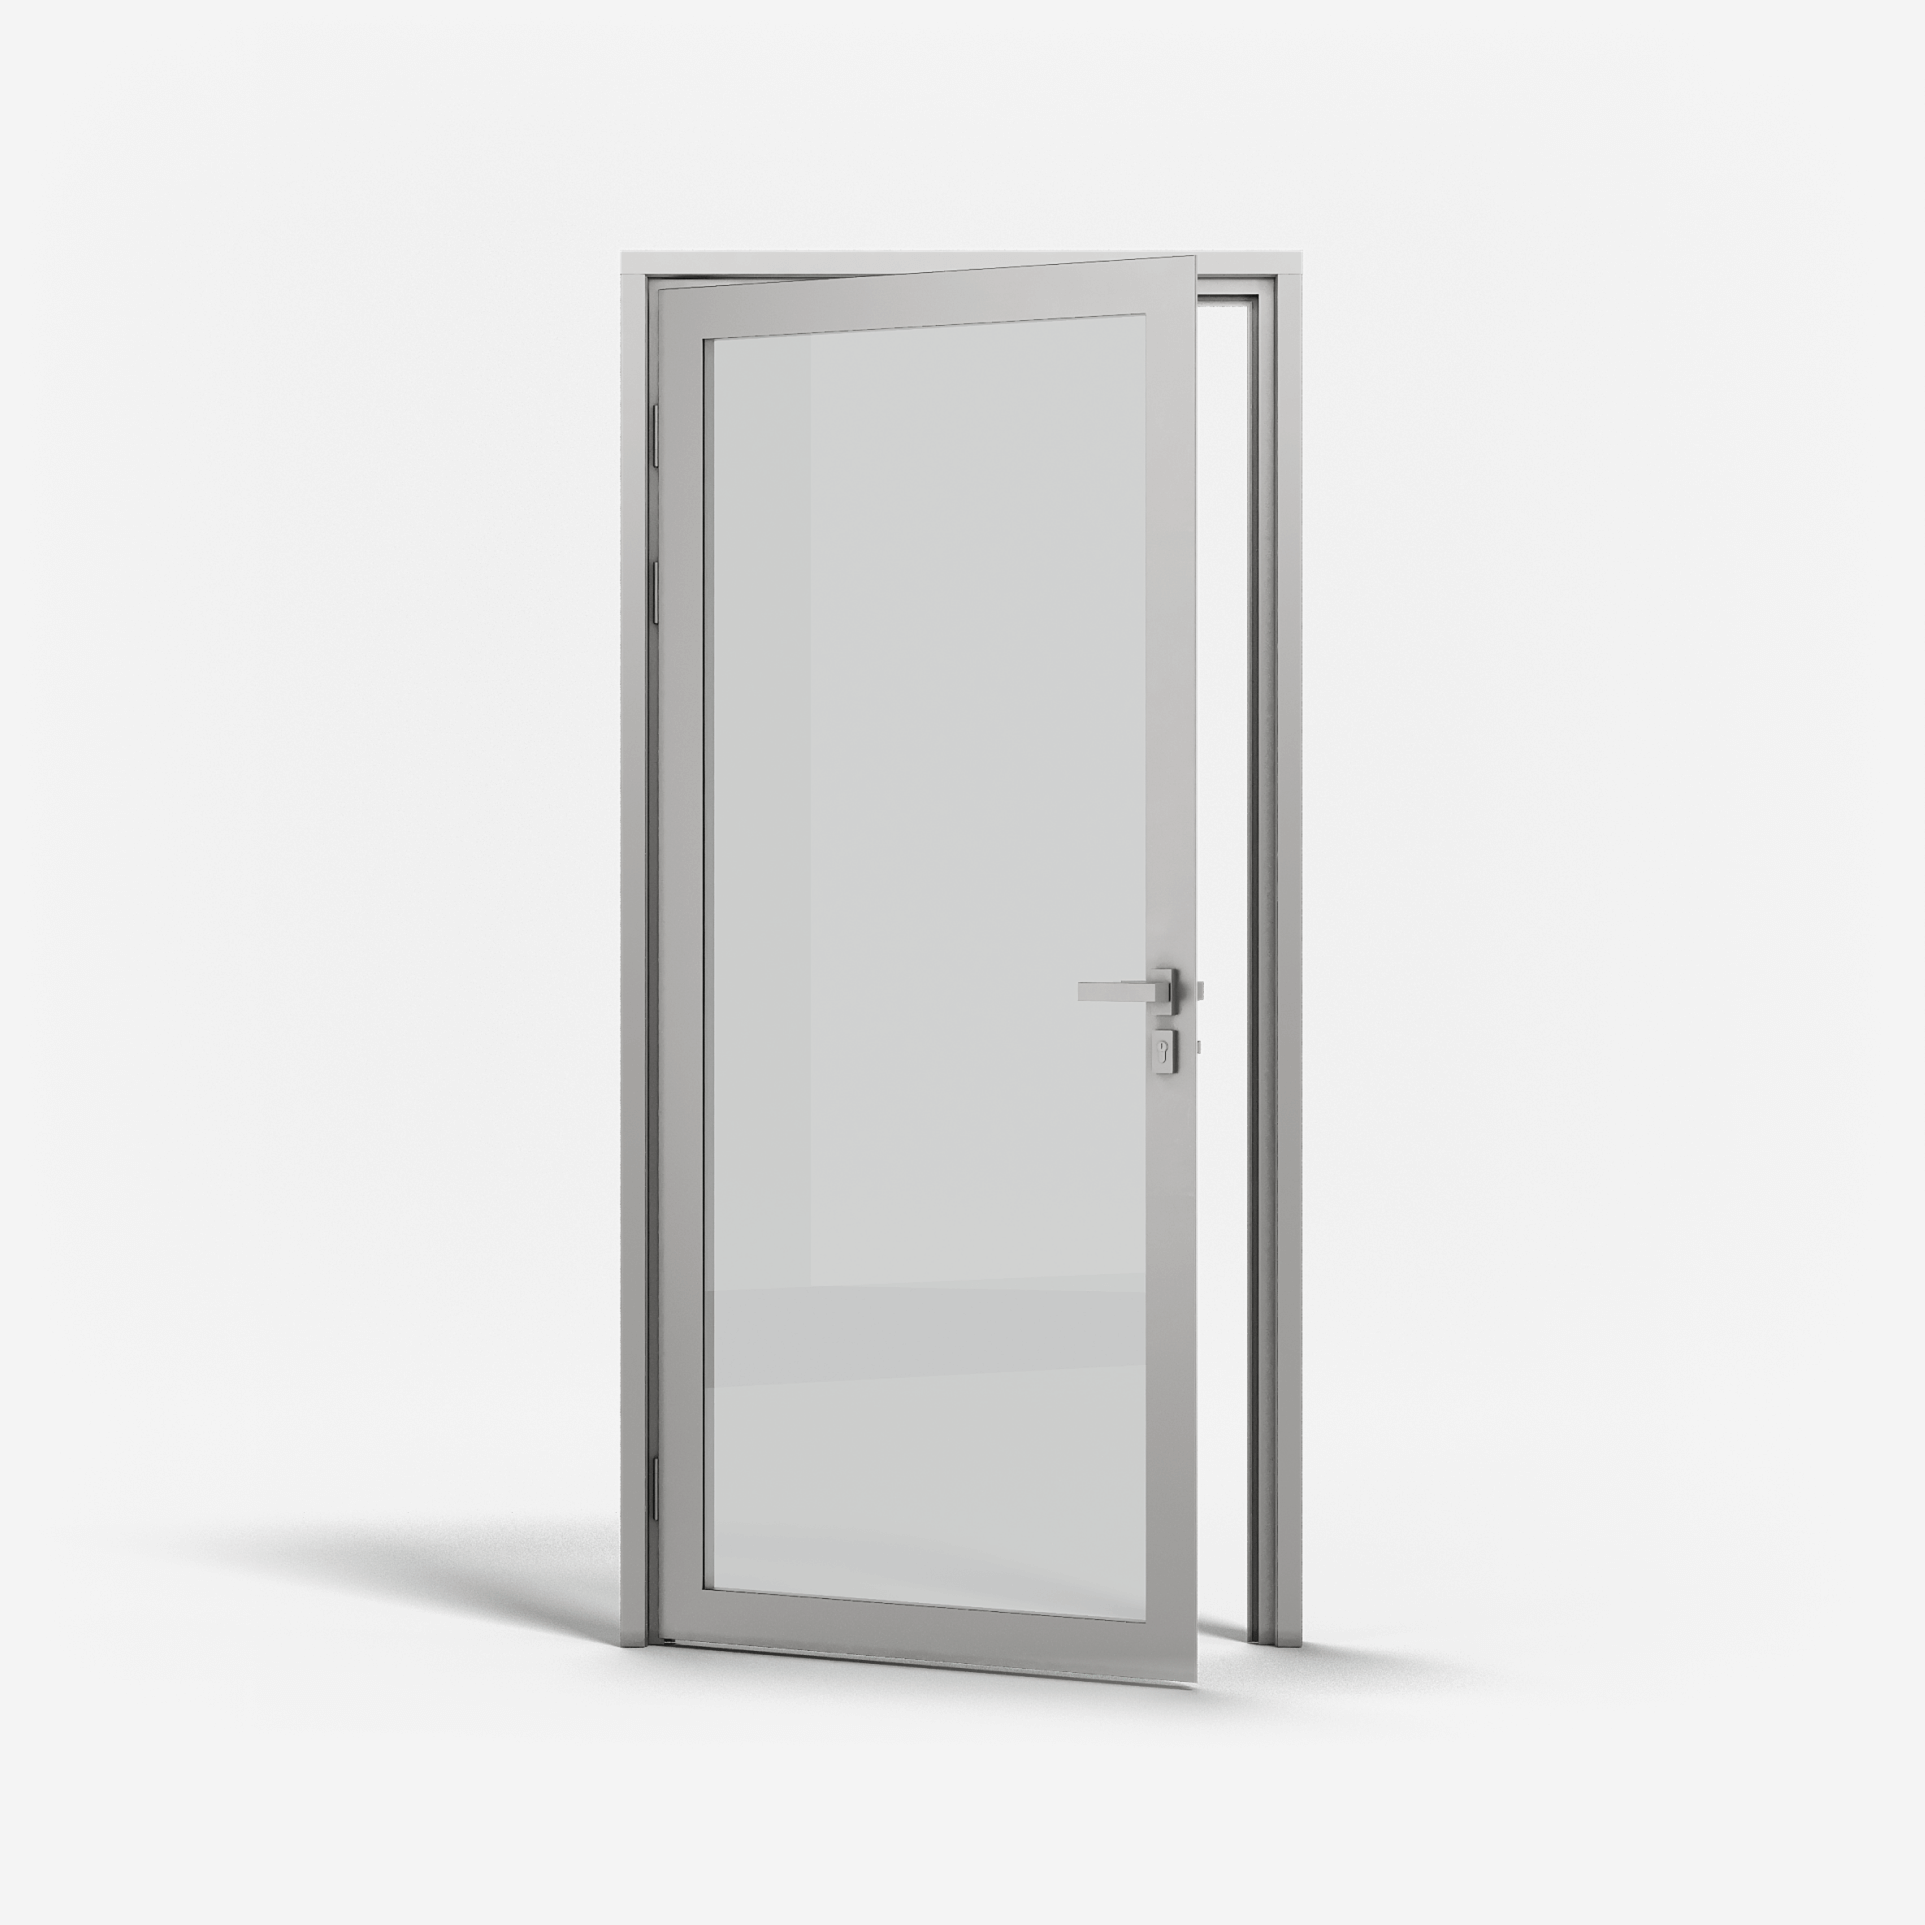 KOMPAS Aluminum Framed Single Swing Door - LH Out